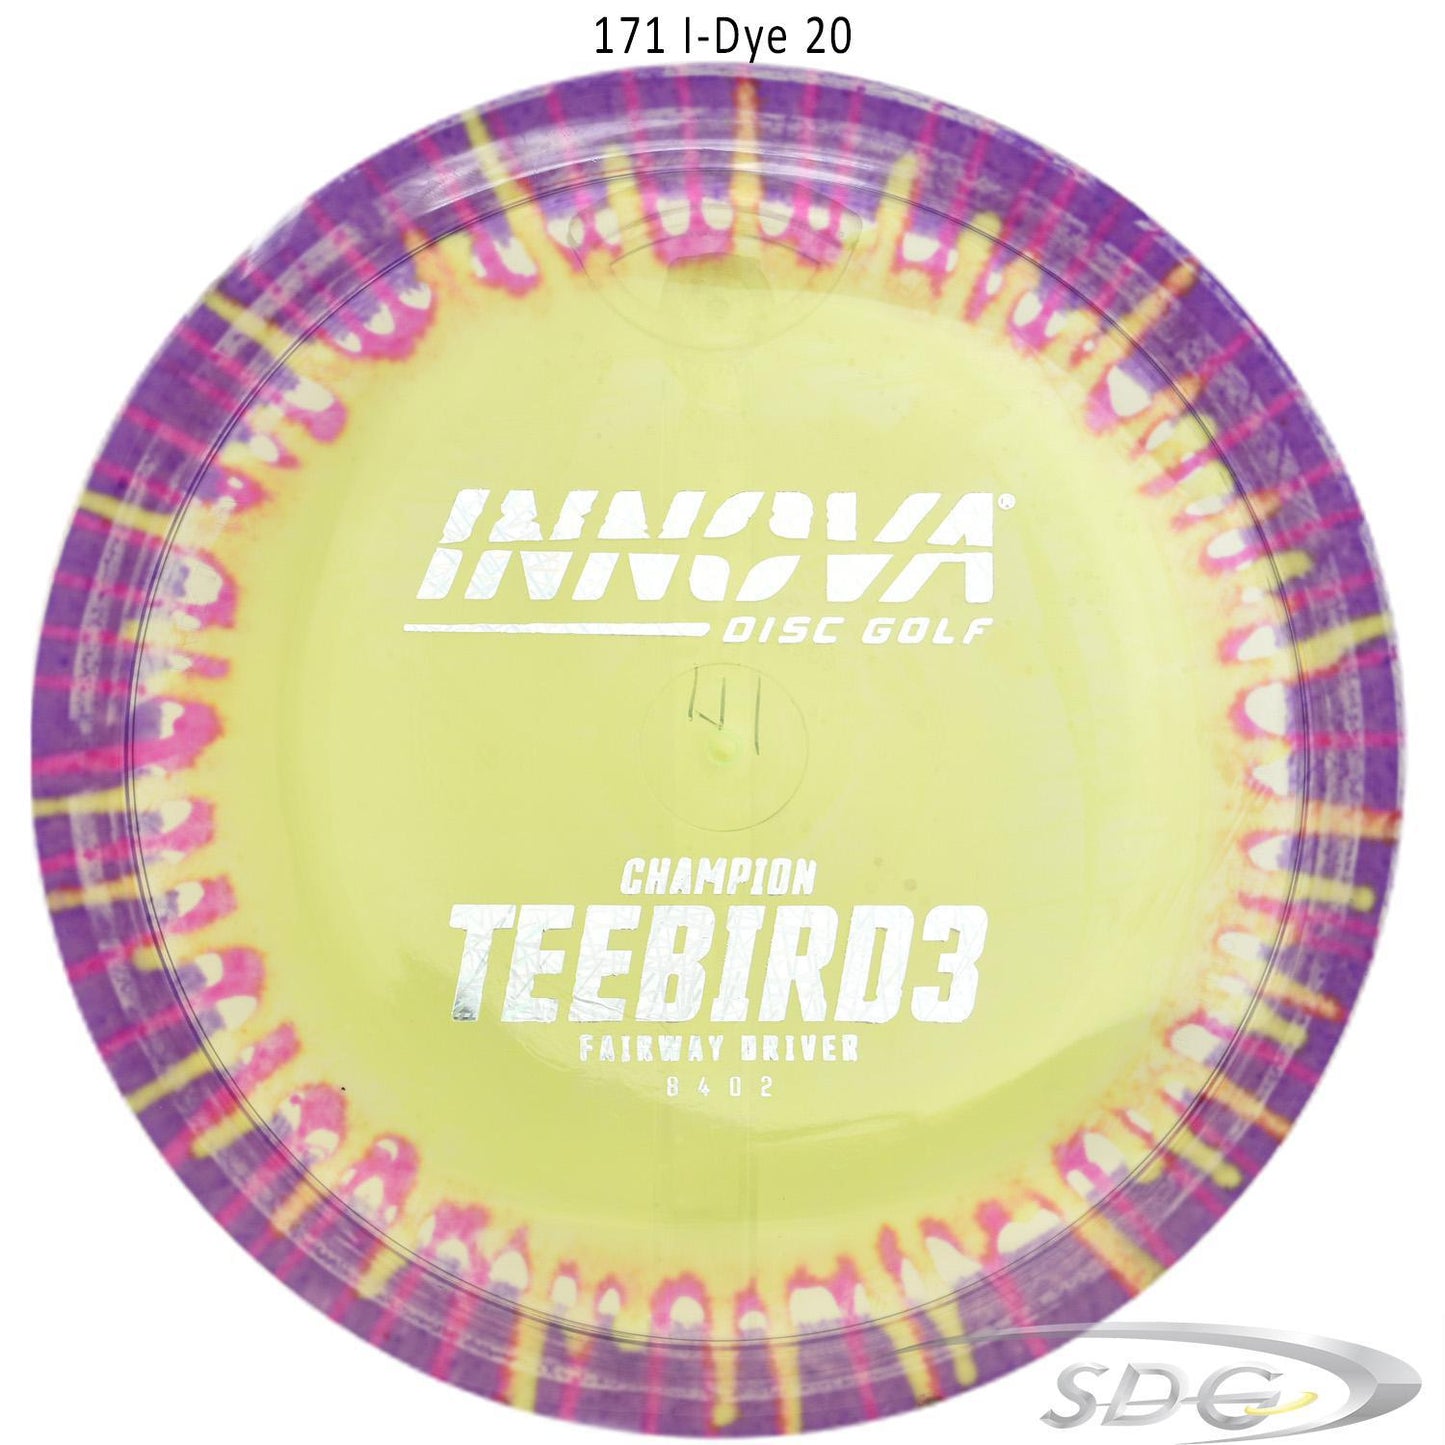 innova-champion-teebird3-i-dye-disc-golf-fairway-driver 171 I-Dye 20 